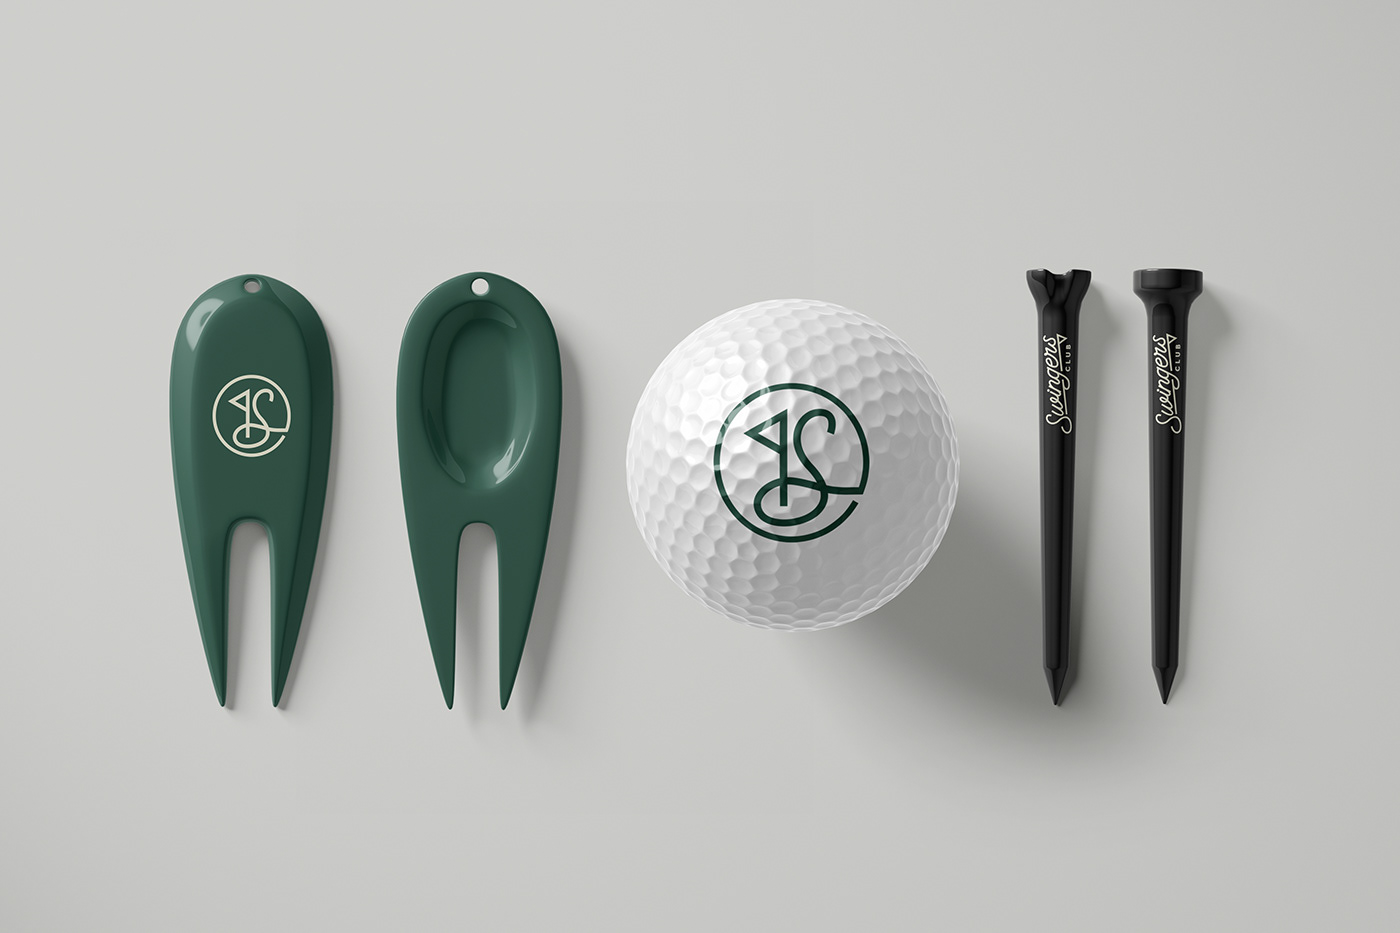 Swingers club branded golf ball, golf tees